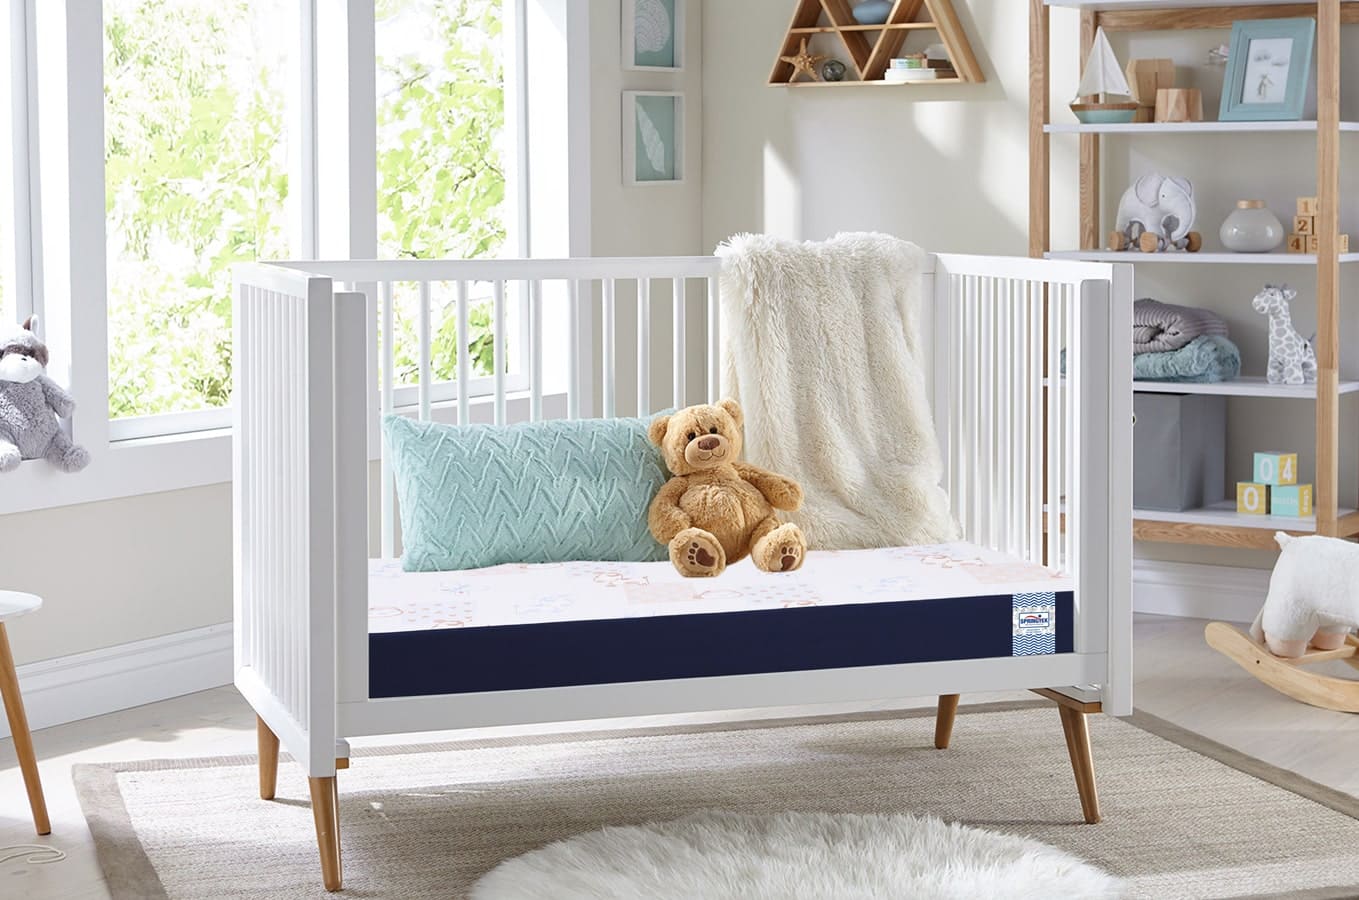 buying a baby crib mattress